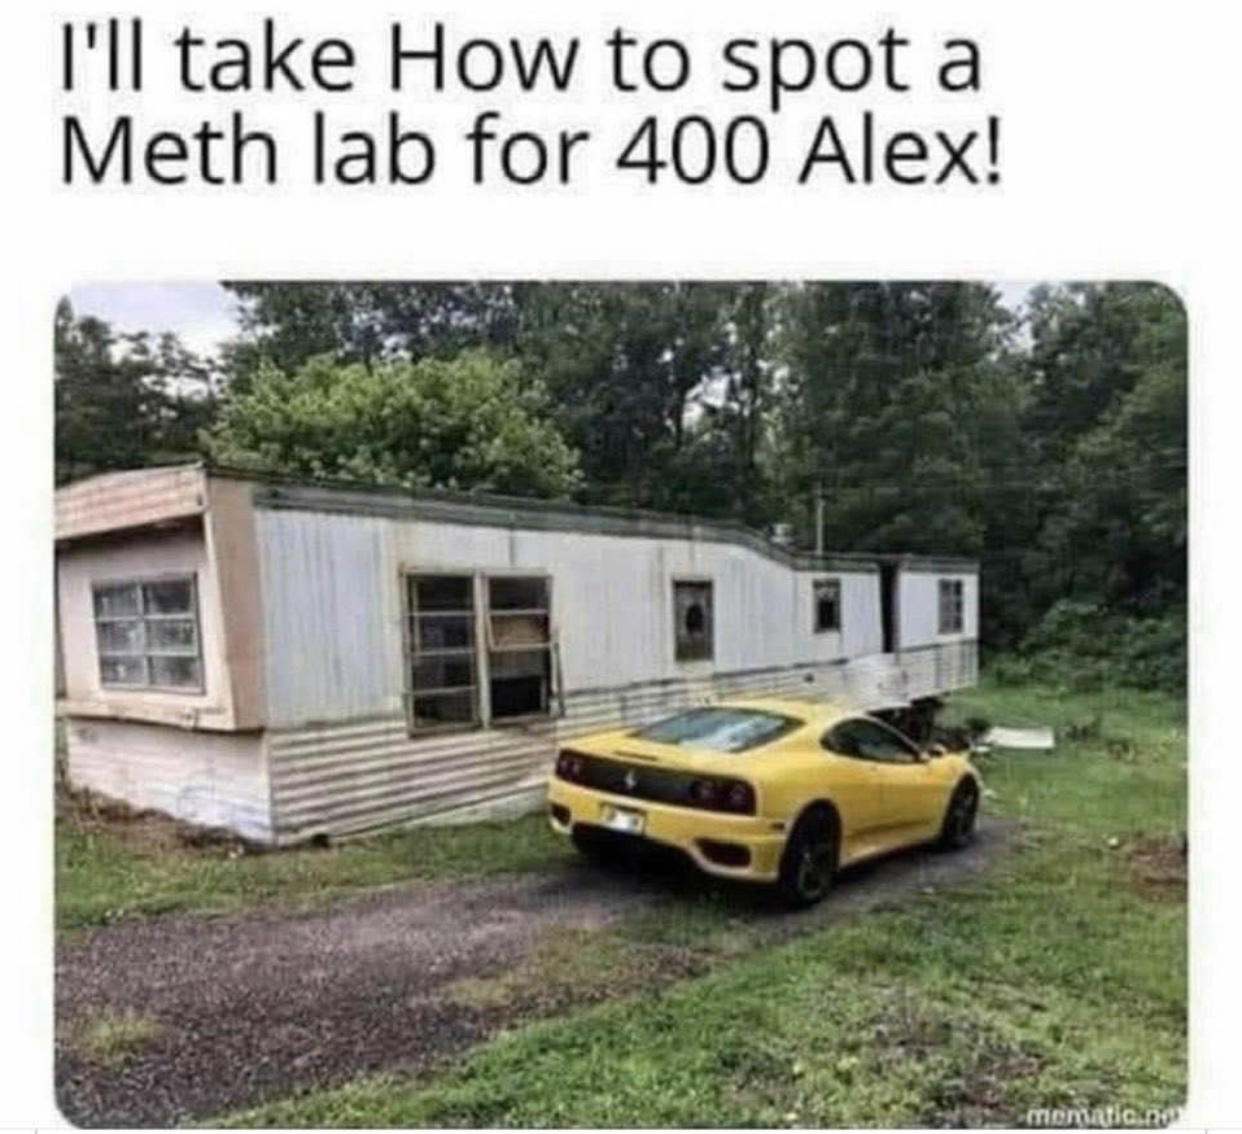 asphalt - I'll take How to spot a Meth lab for 400 Alex! mematian